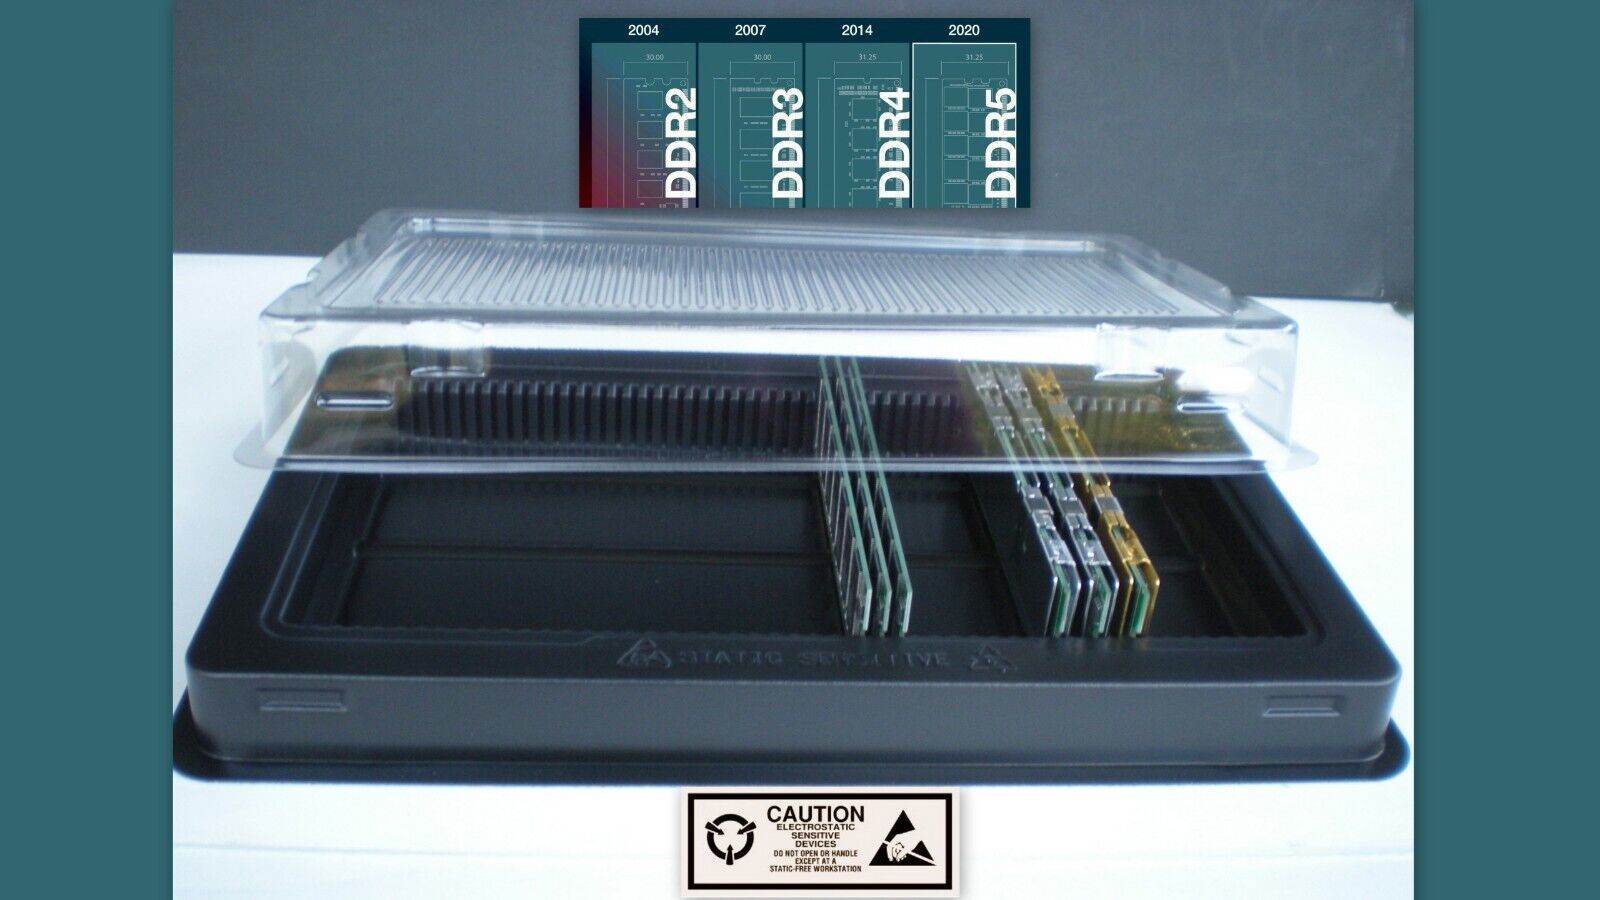 Memory Stick RAM Shipping Box - 5 Trays fits 250 DDR5 DDR4 DDR3 DIMM Modules New